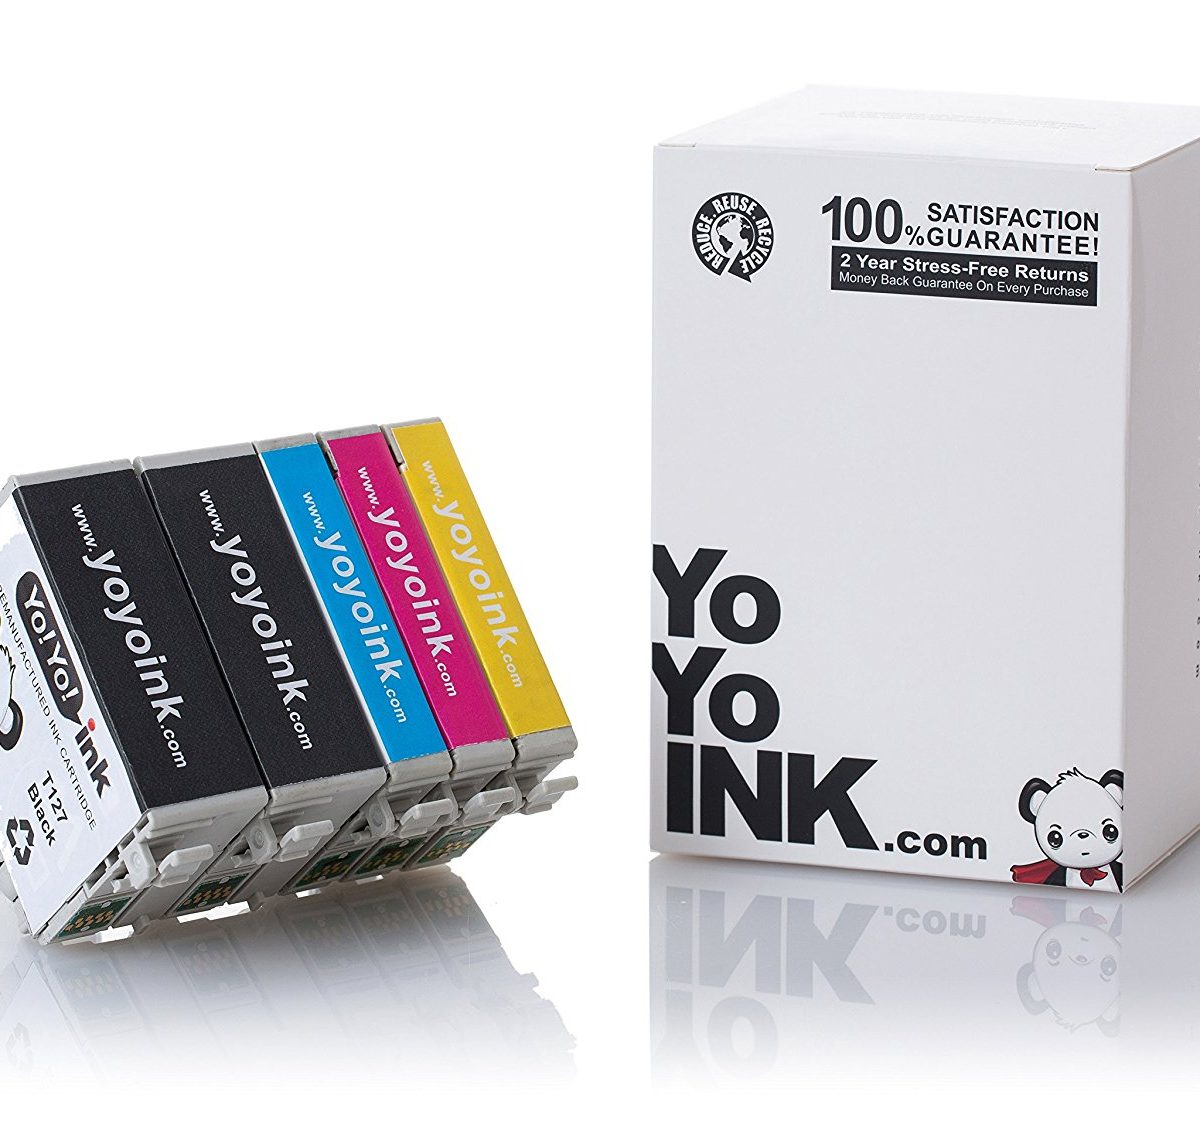 Remanufactured Epson T200xl 200 Xl Printer Ink Cartridge 10 Pack 4 Black 2 Cyan 2 1463